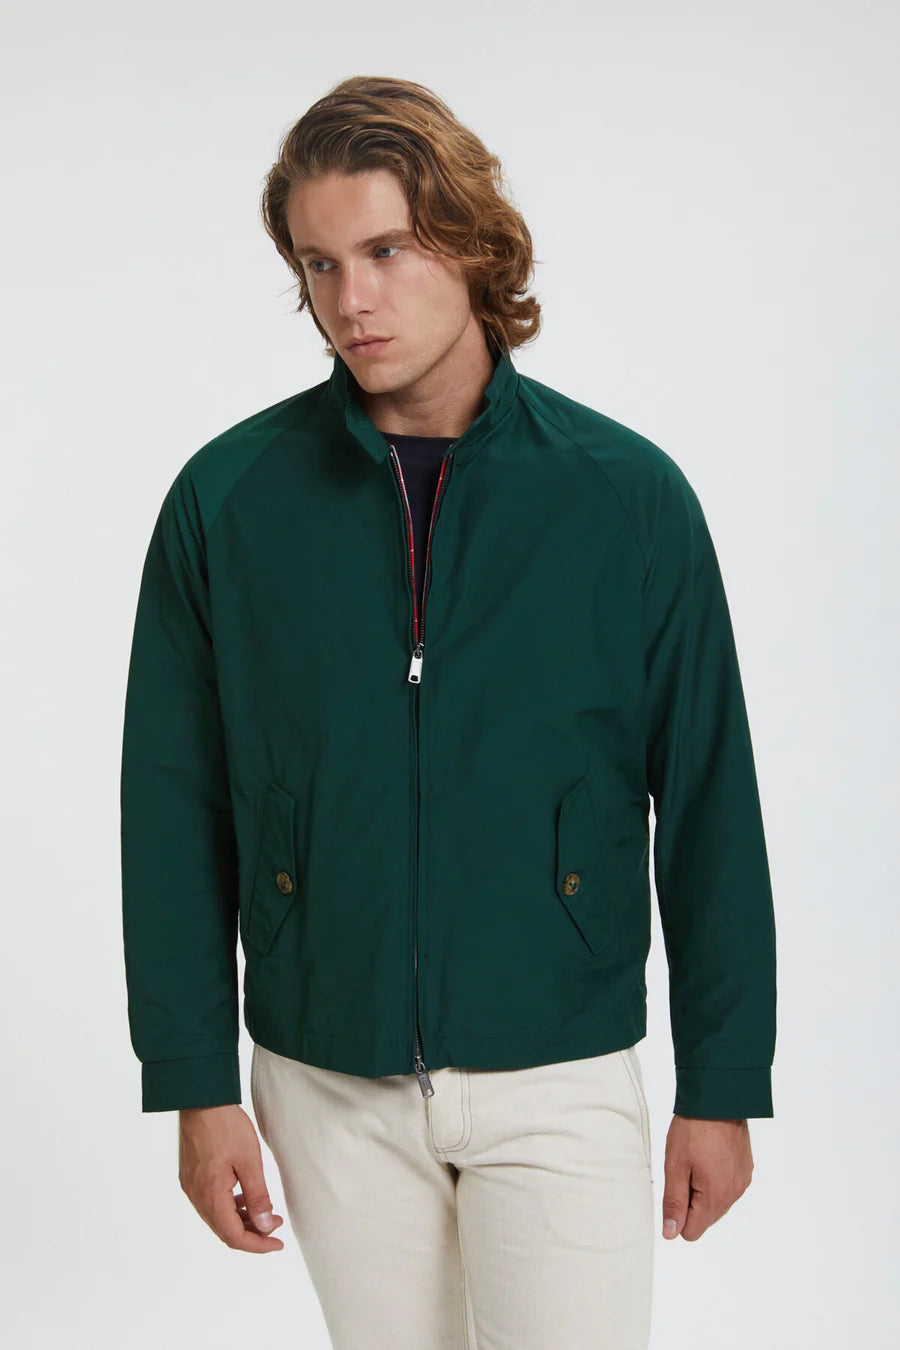 Baracuta G4 jacket